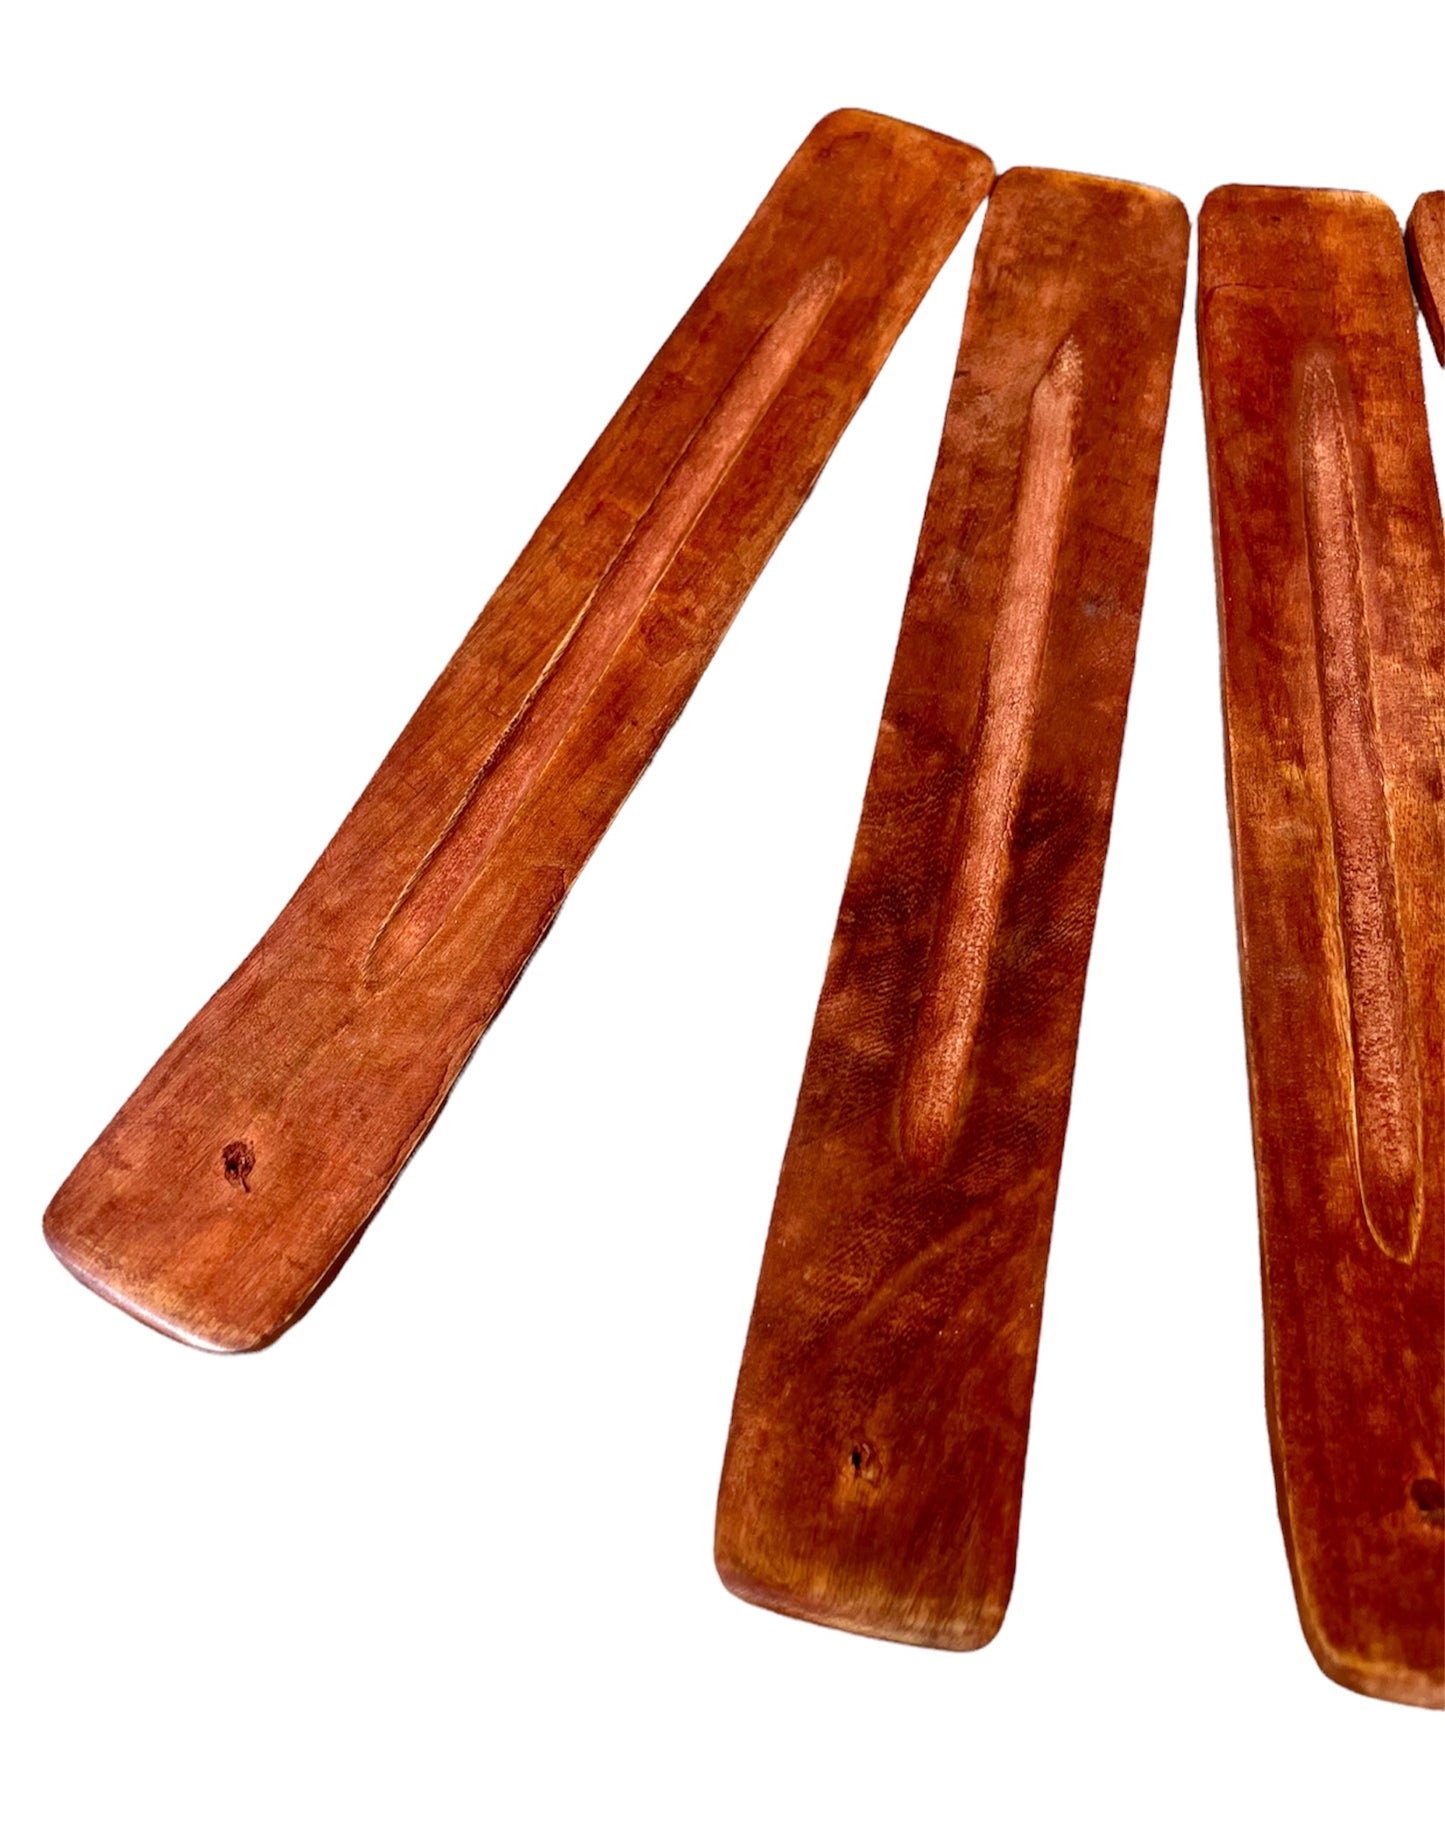 Mango Wood Incense Holder Ash Catcher